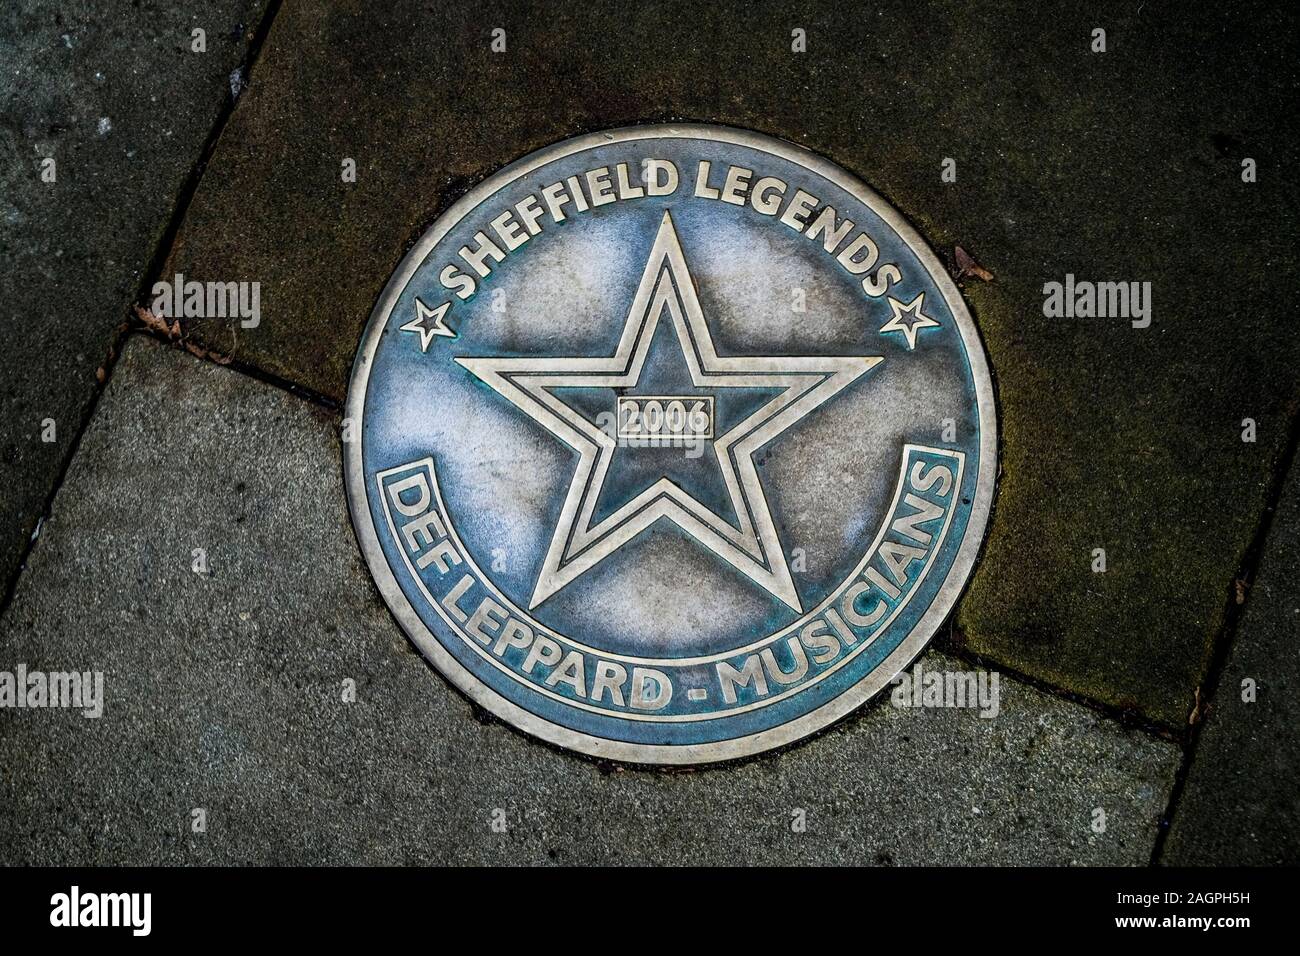 Def Leppard, Sheffield Legends, Hall of Fame star, Sheffield, Yorkshire, England, UK Stock Photo